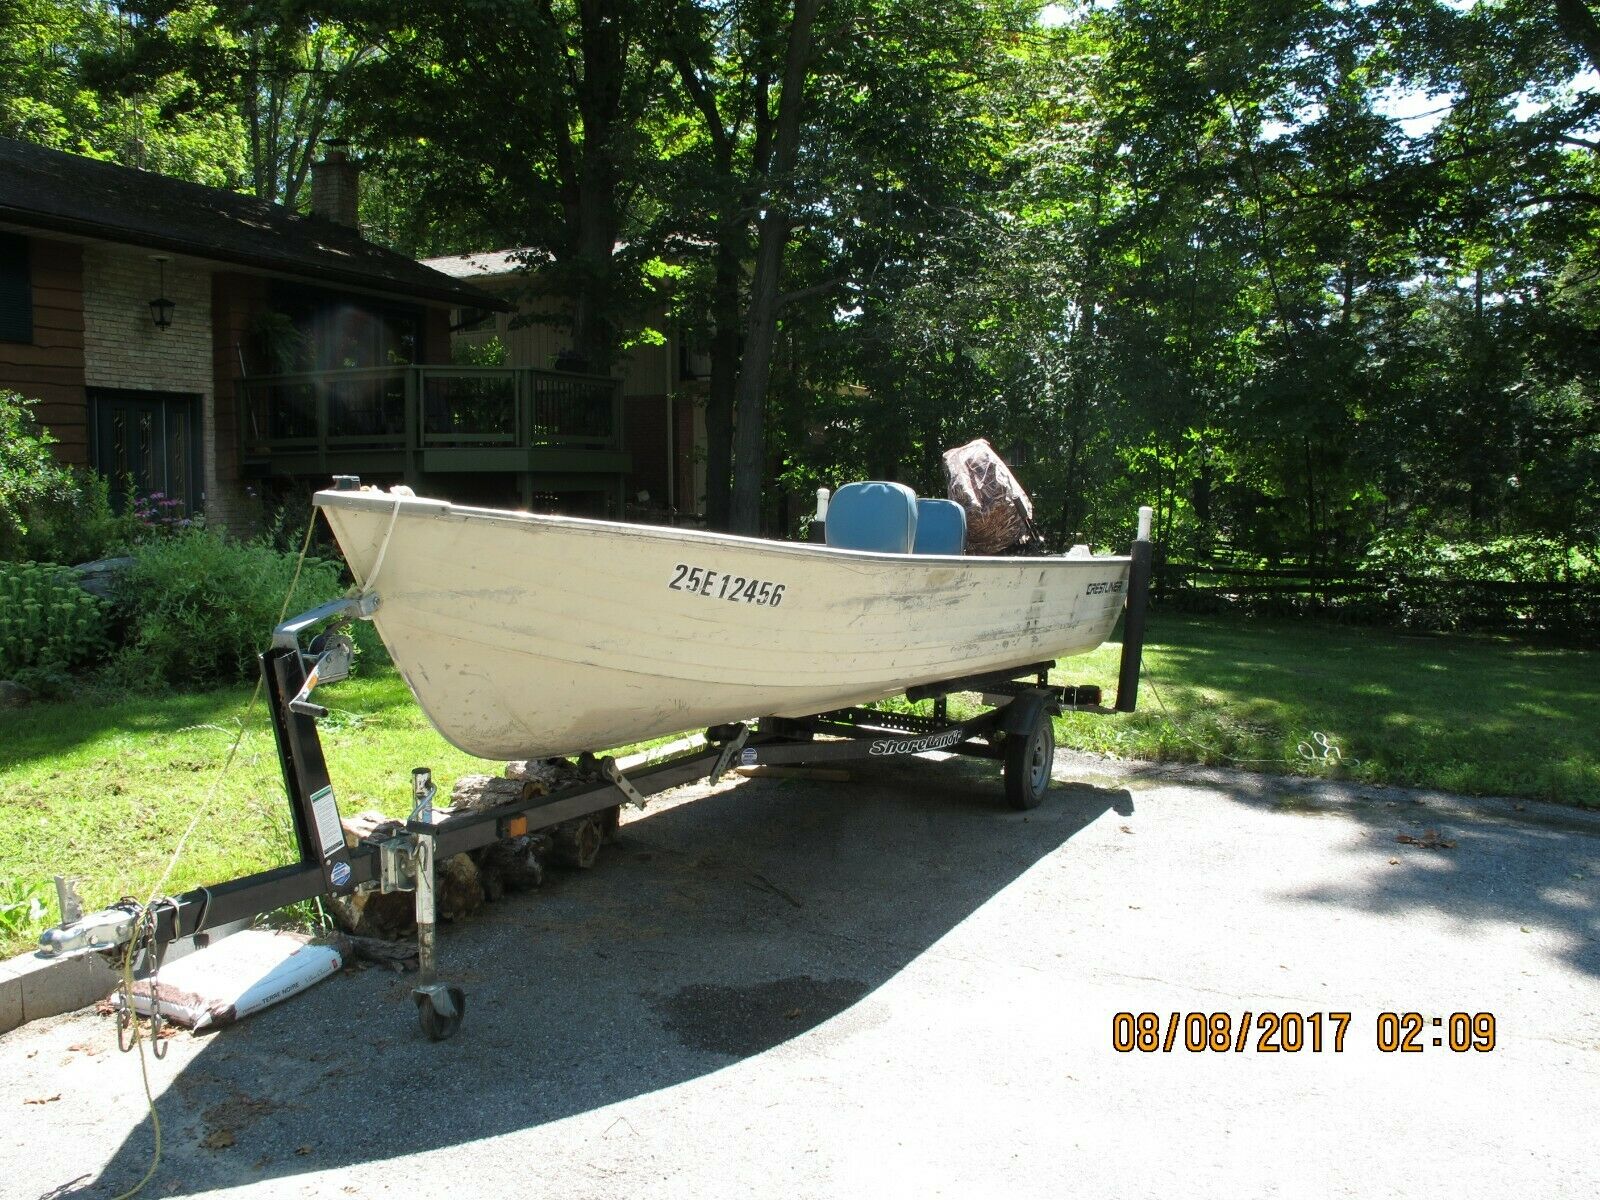 16 Foot Aluminum Boat, Trailer, Barely Used 25 Hp Motor Ontario Canada ...